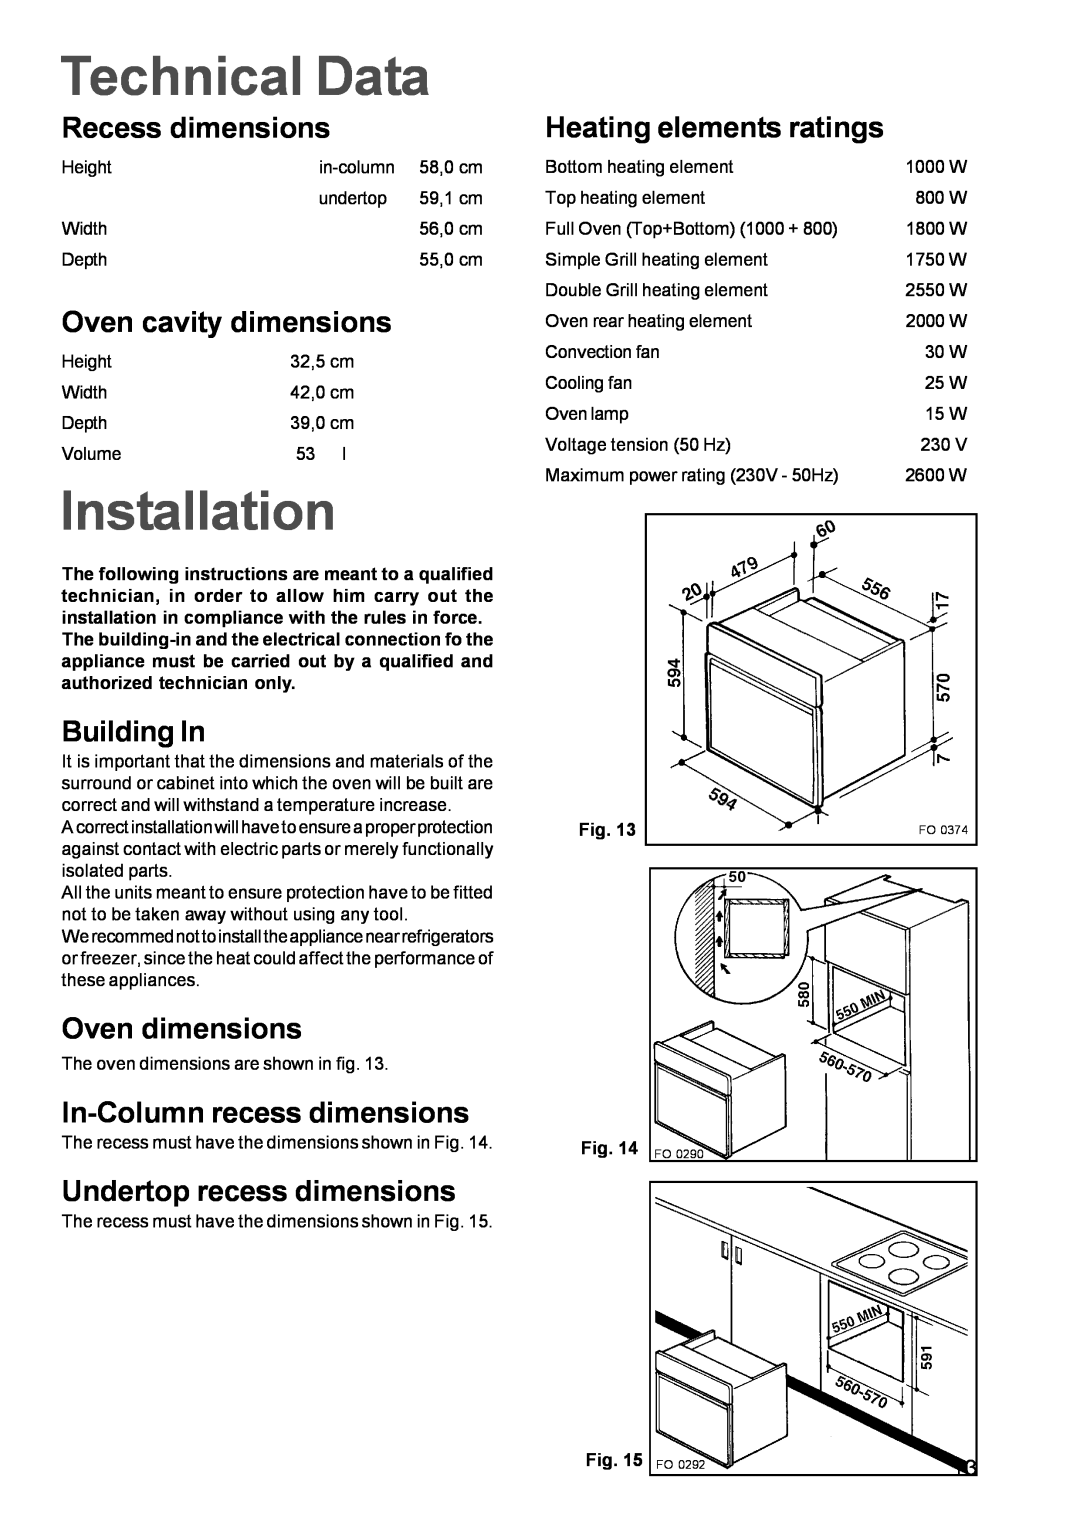 Zanussi manual Technical Data, Installation, Recess dimensions, Oven cavity dimensions, Building In, Oven dimensions 